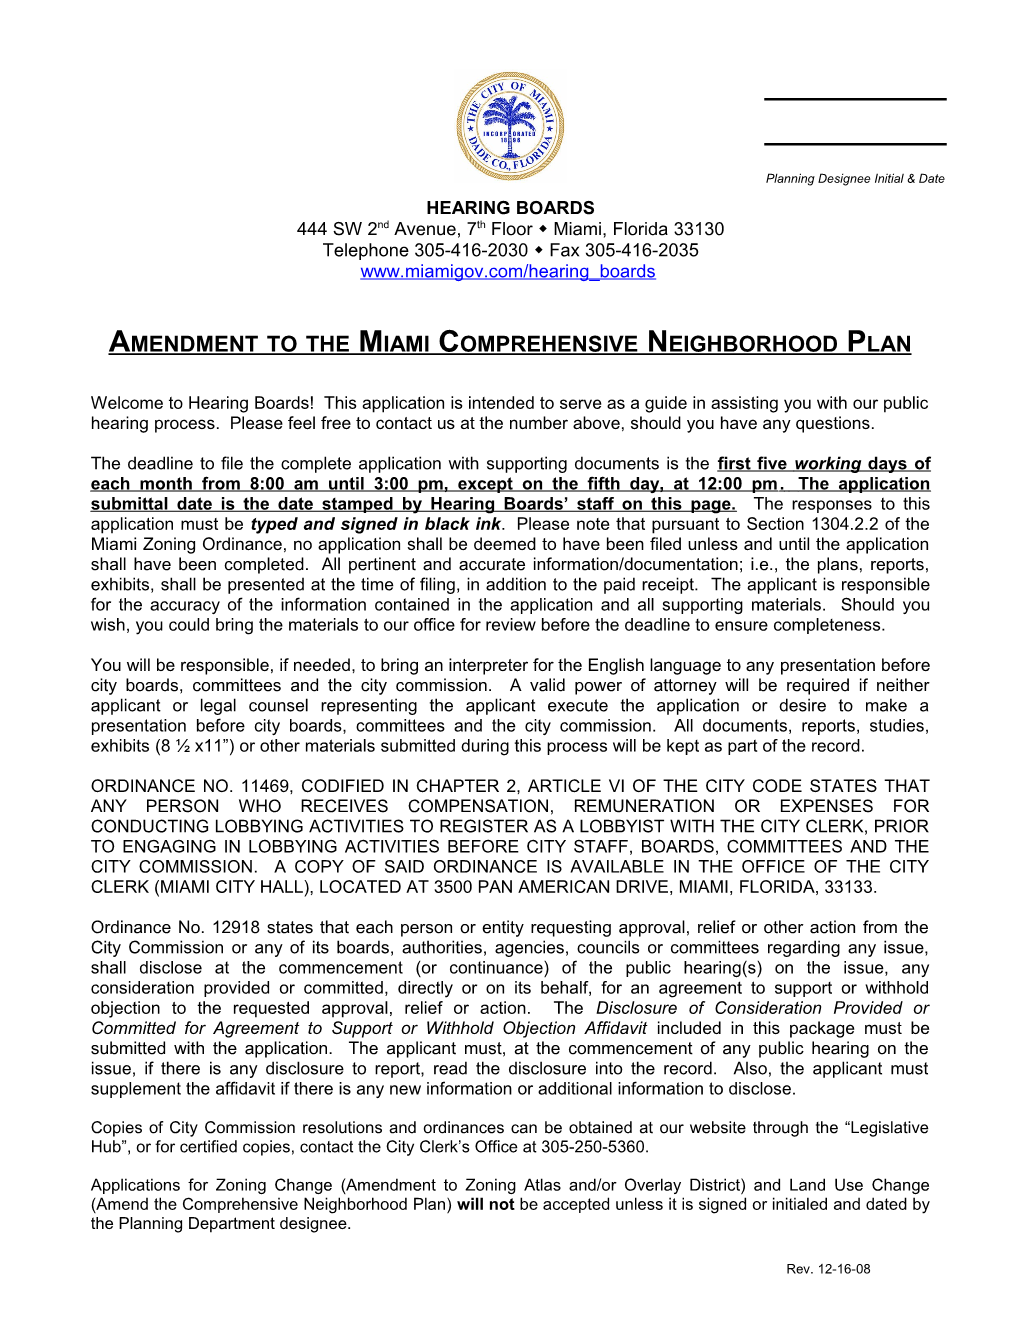 Amendment to the Miami Comprehensive Neighborhood Plan